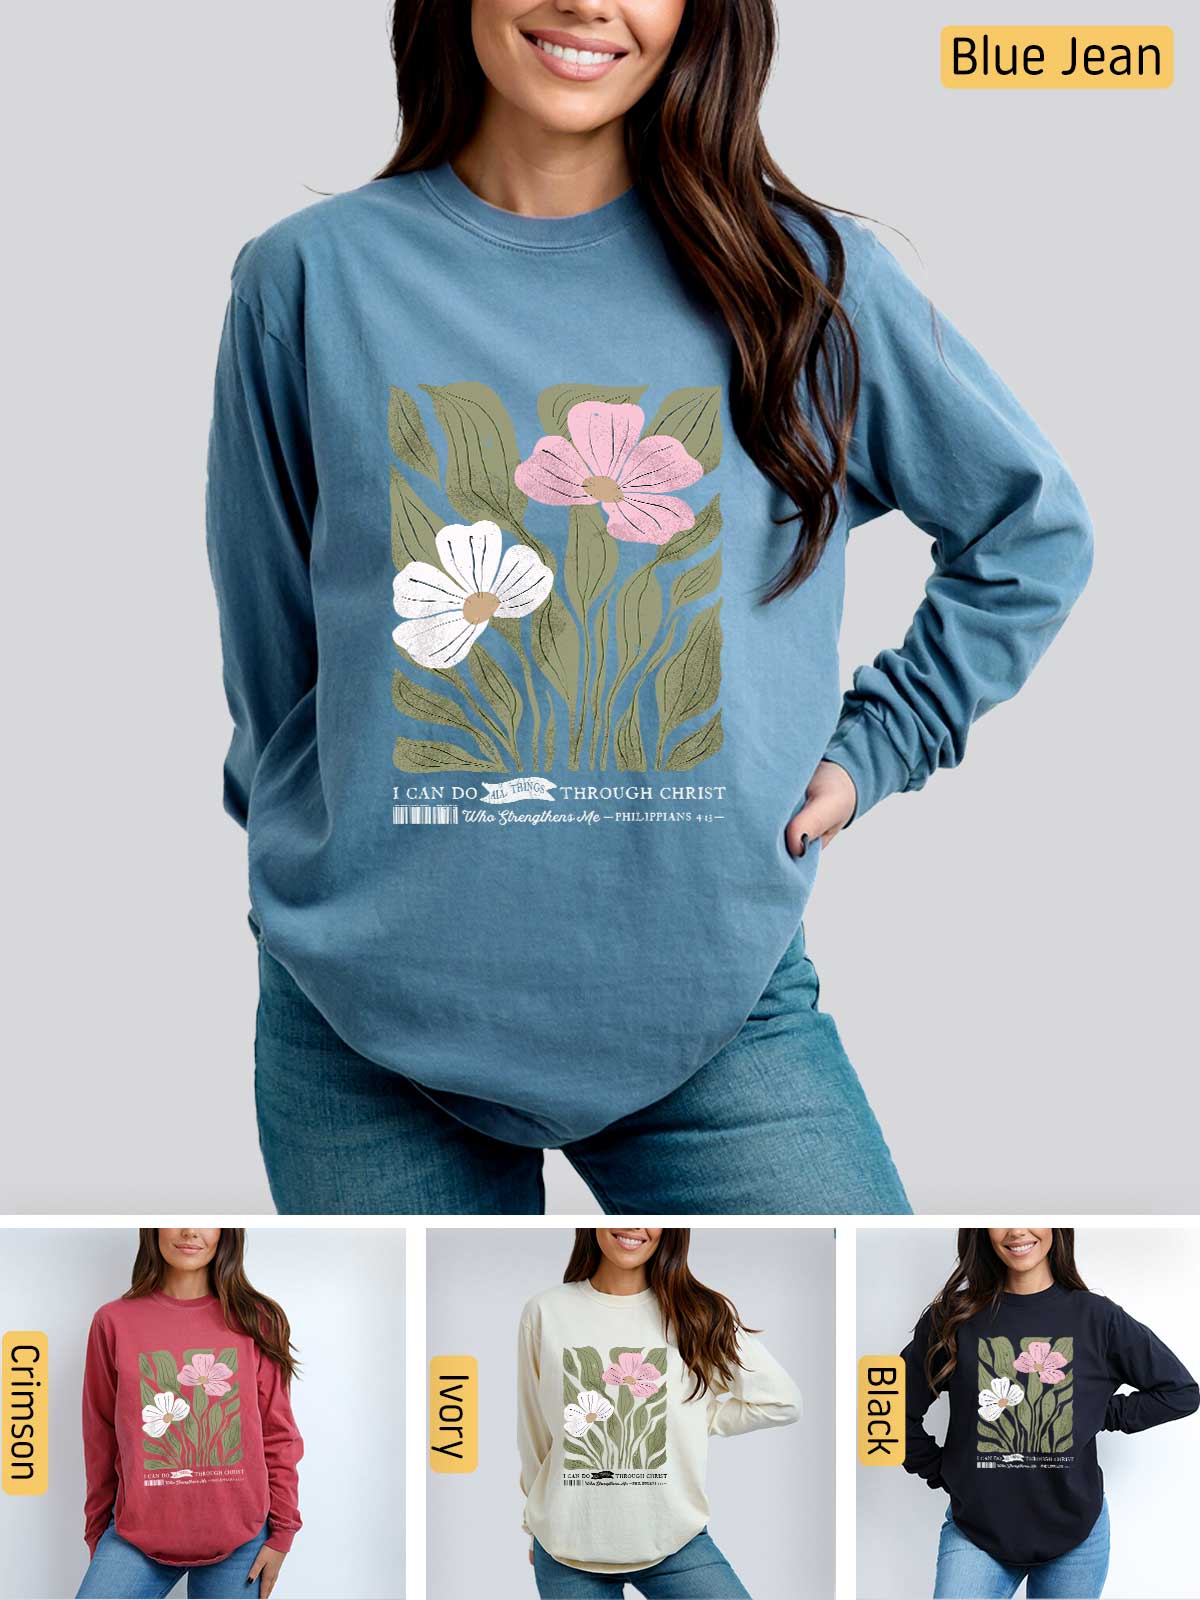 a woman wearing a sweatshirt with flowers on it